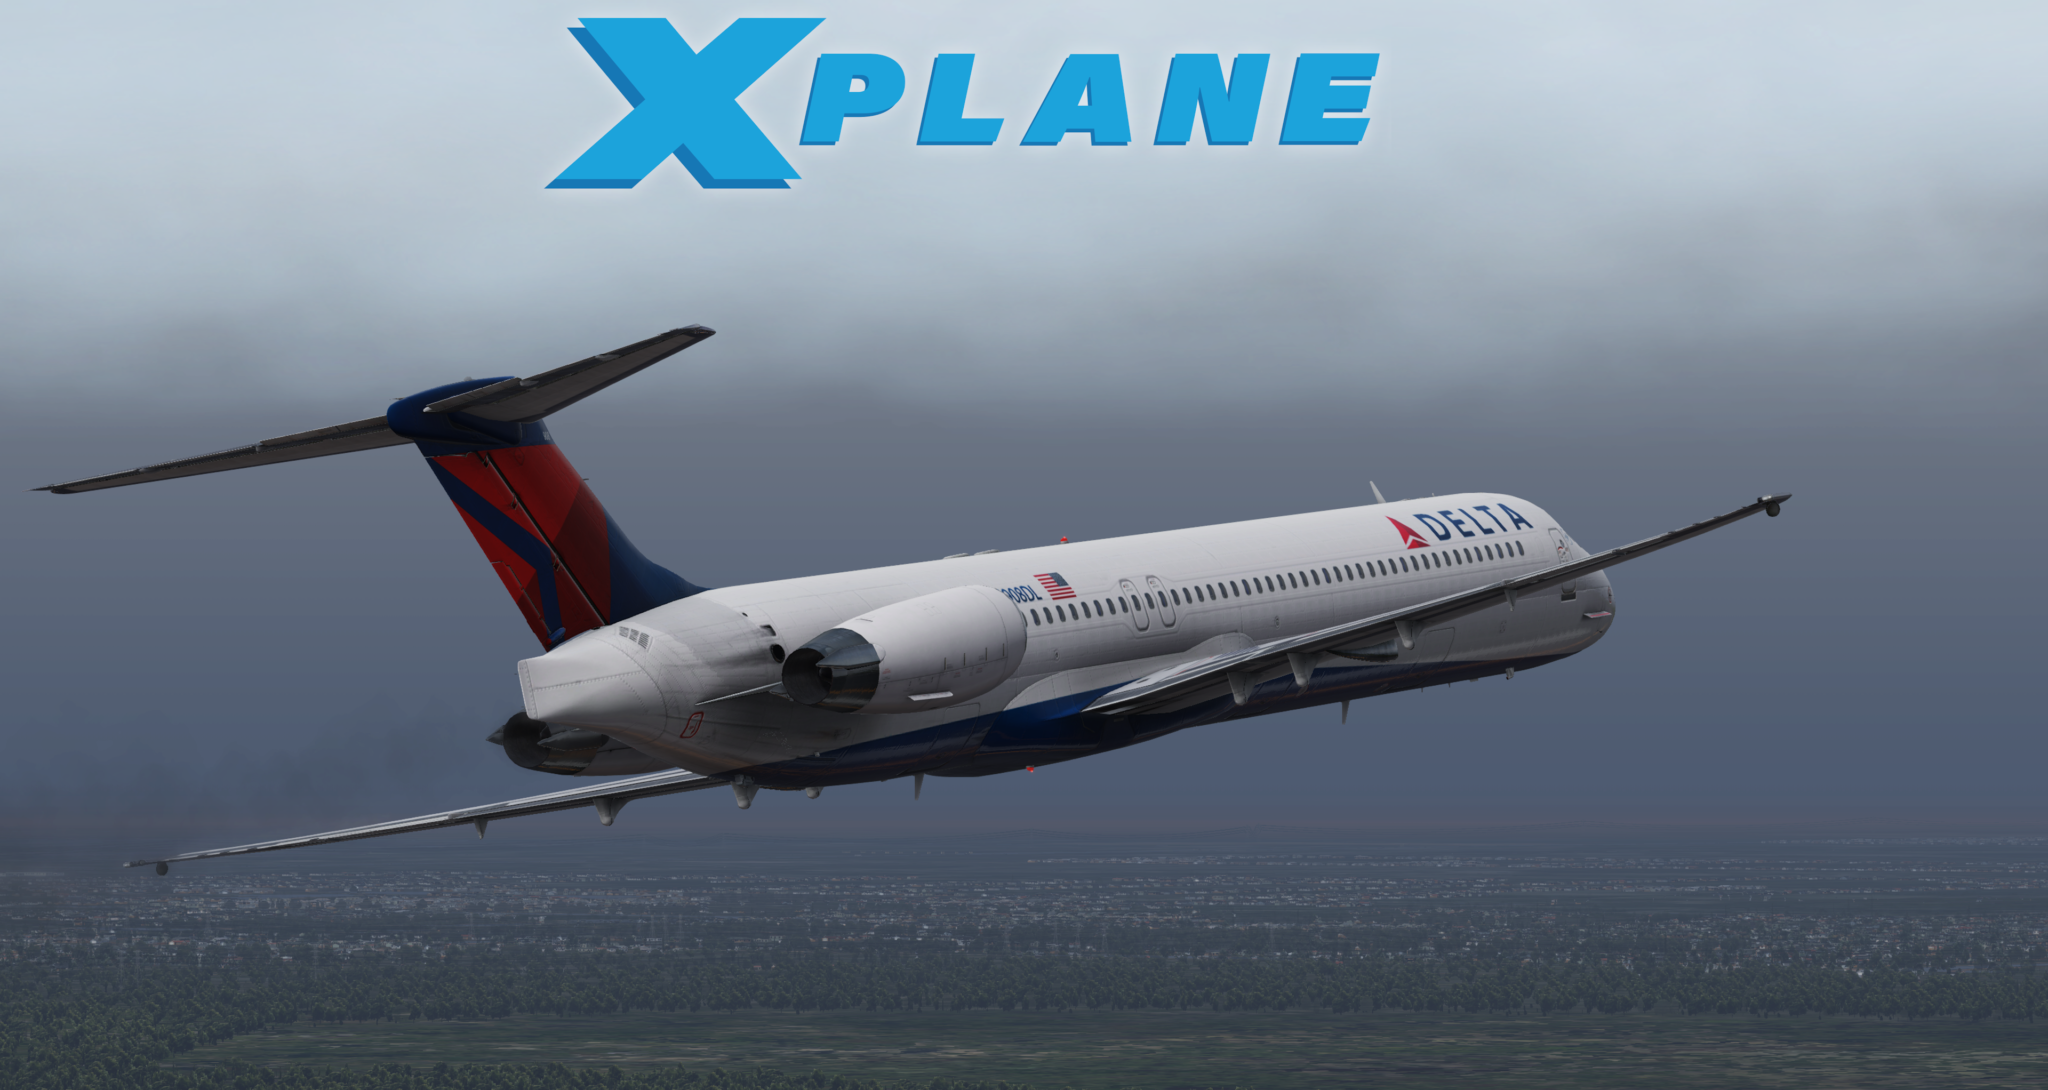 x plane 11 download full version free windows